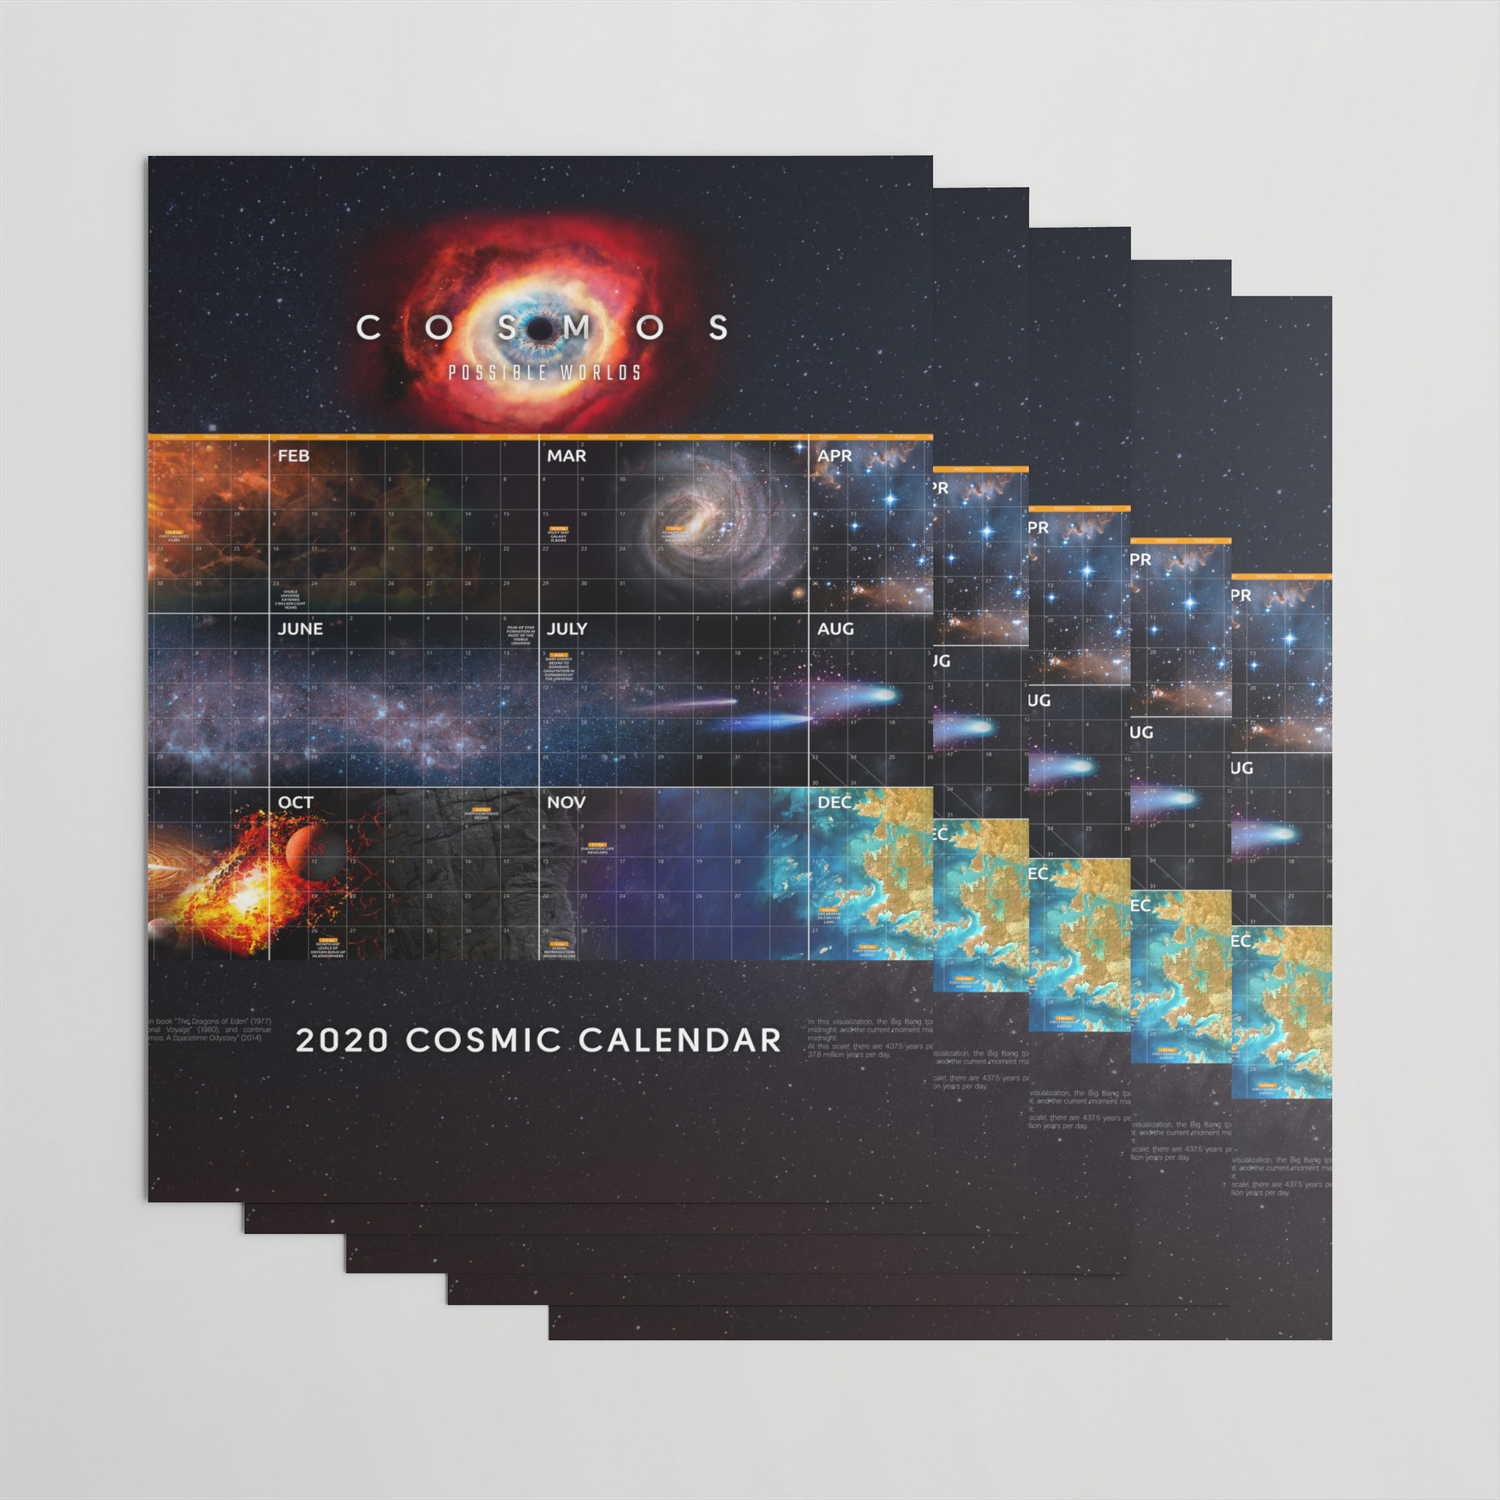 cosmos a spacetime odyssey calendar